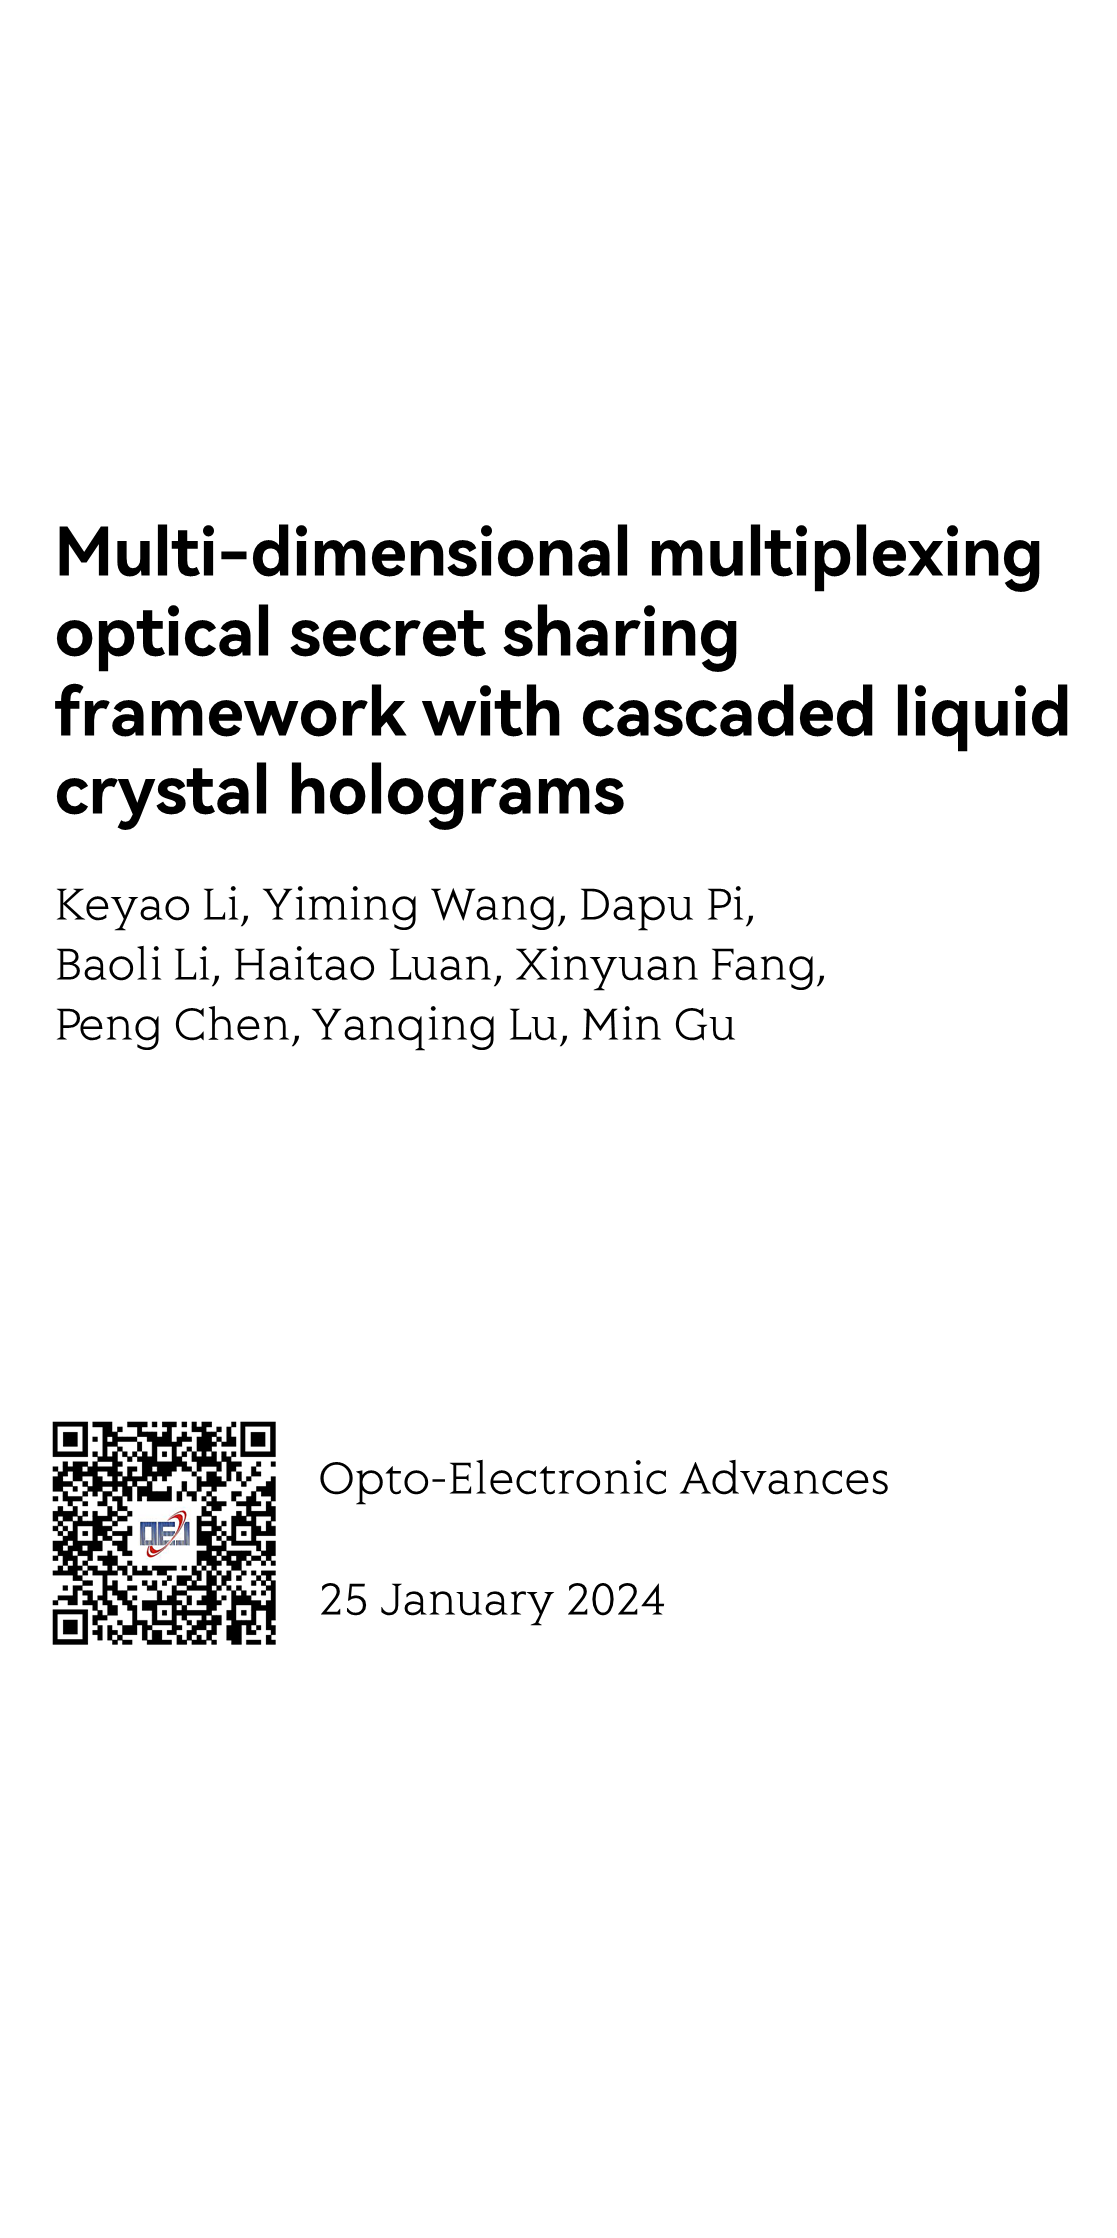 Multi-dimensional multiplexing optical secret sharing framework with cascaded liquid crystal holograms_1